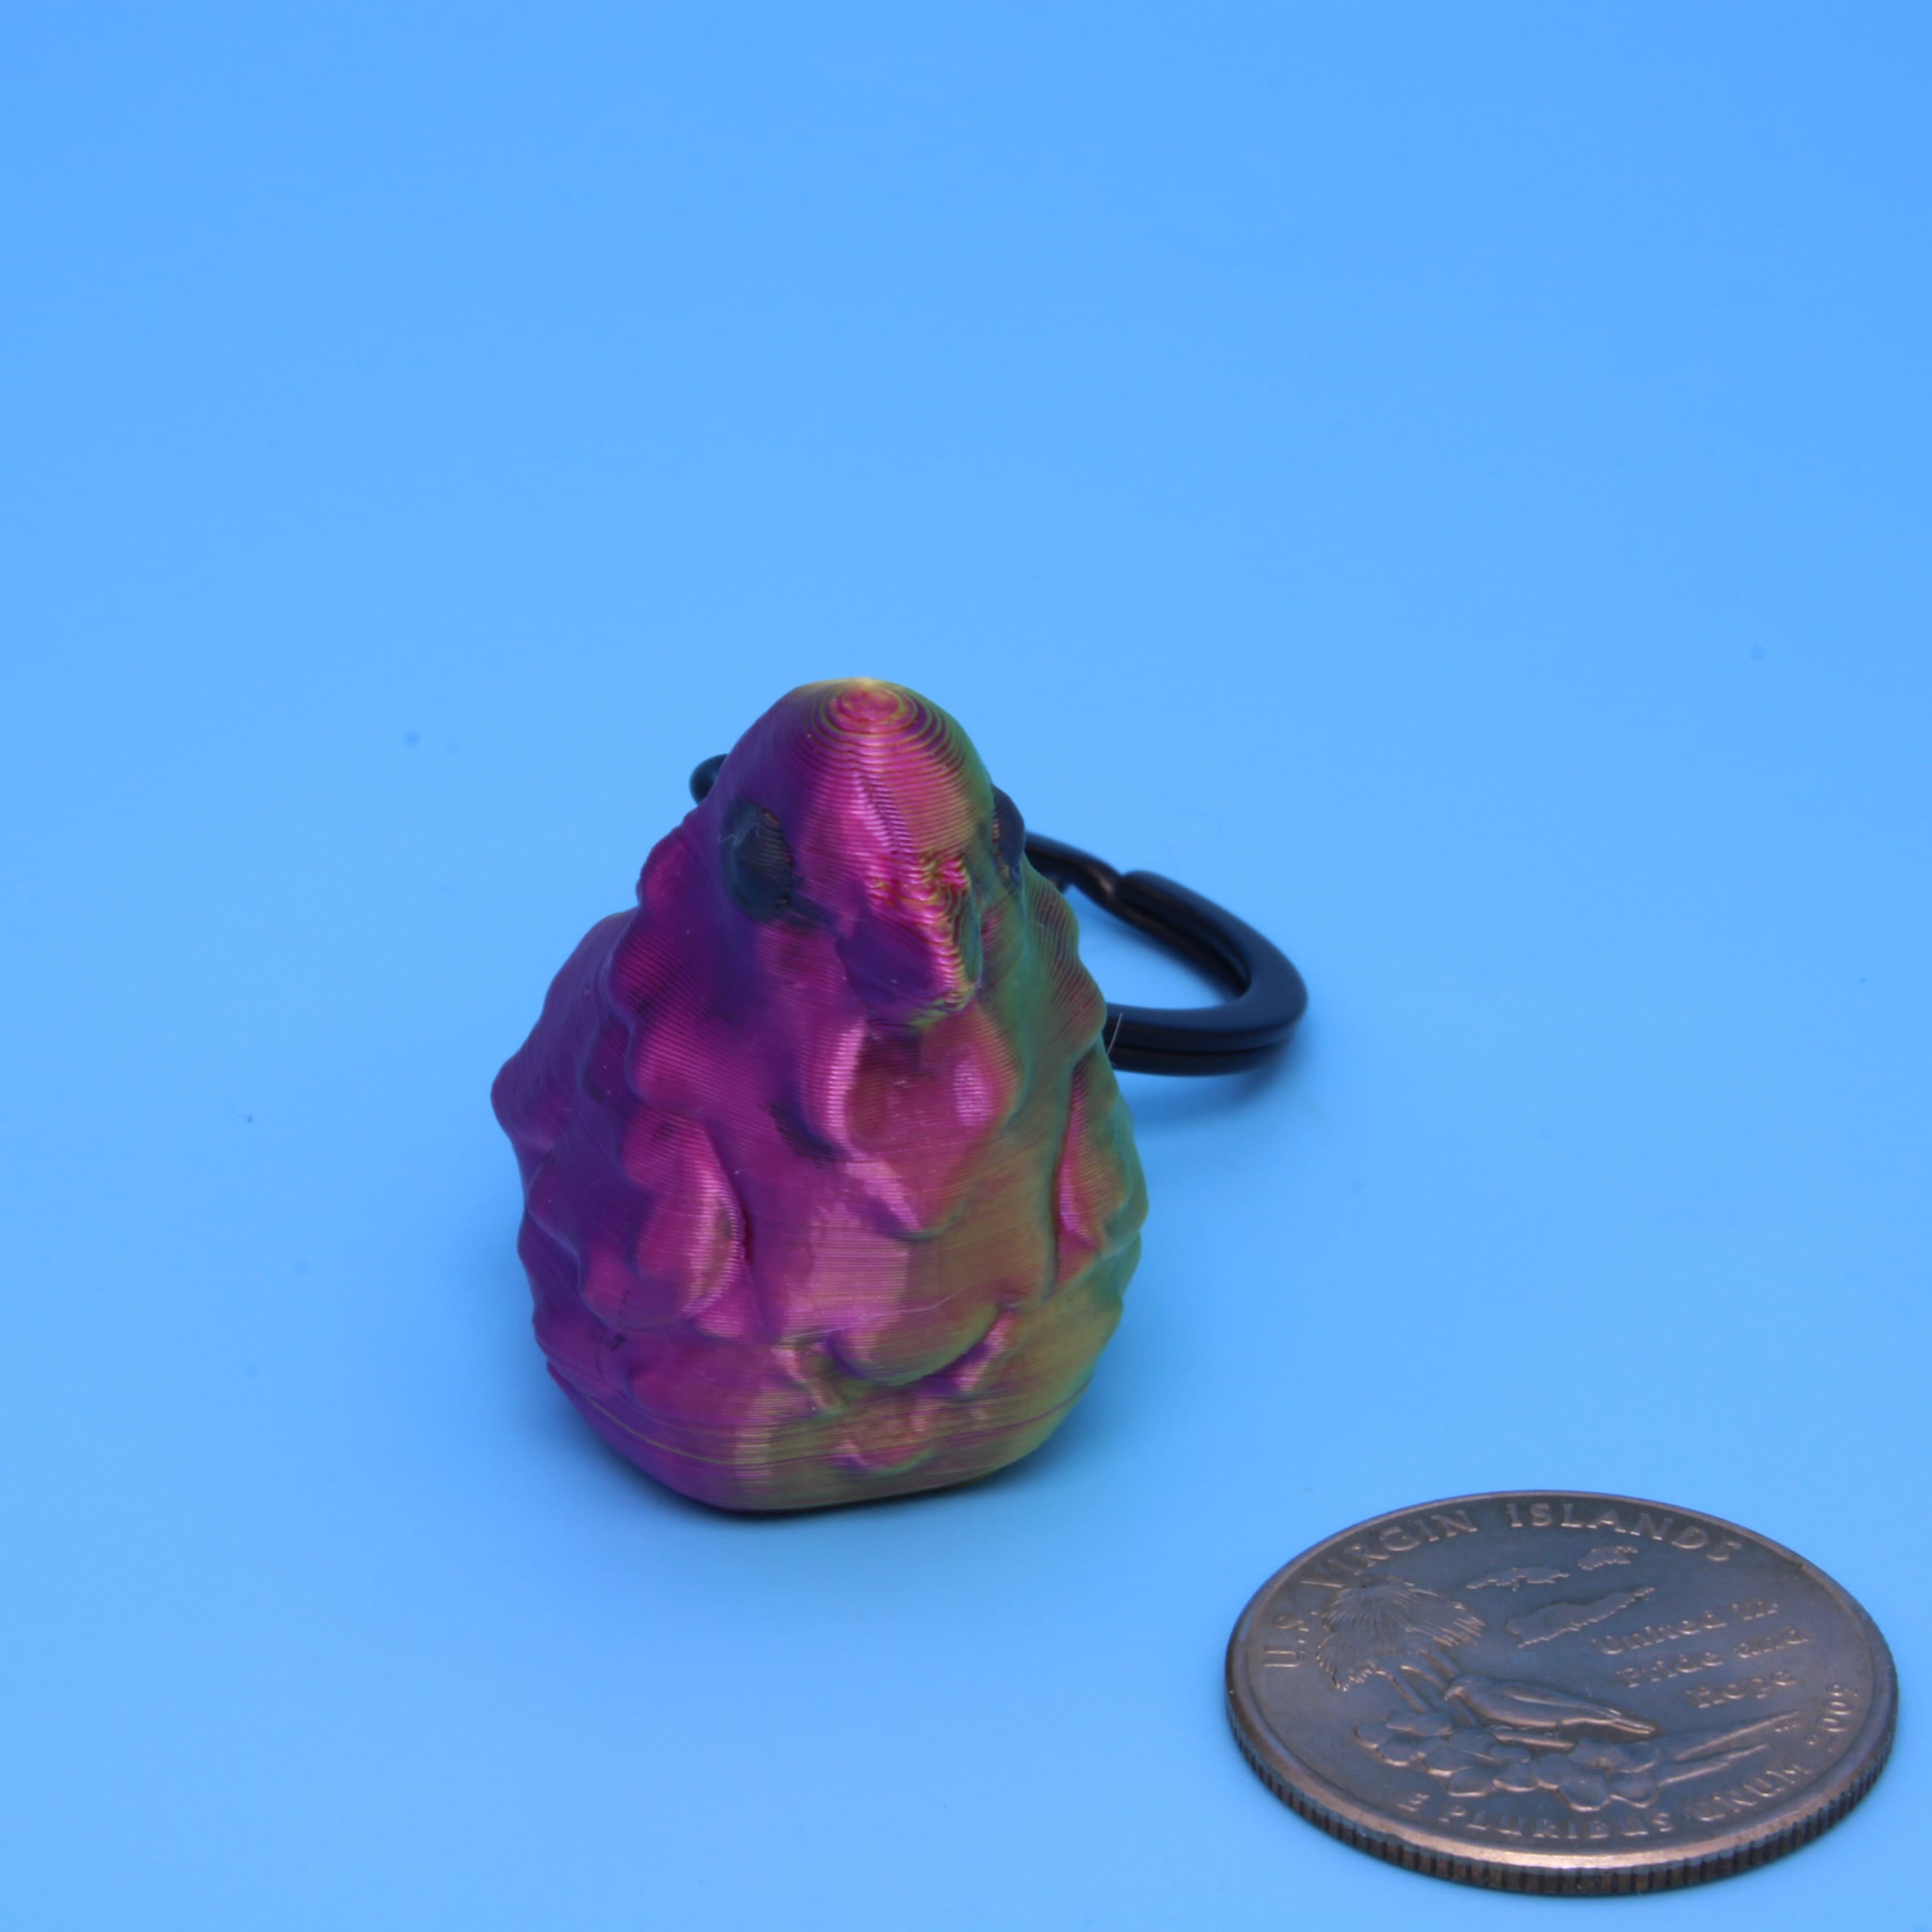 Miniature Raven Keychain. 3D Printed